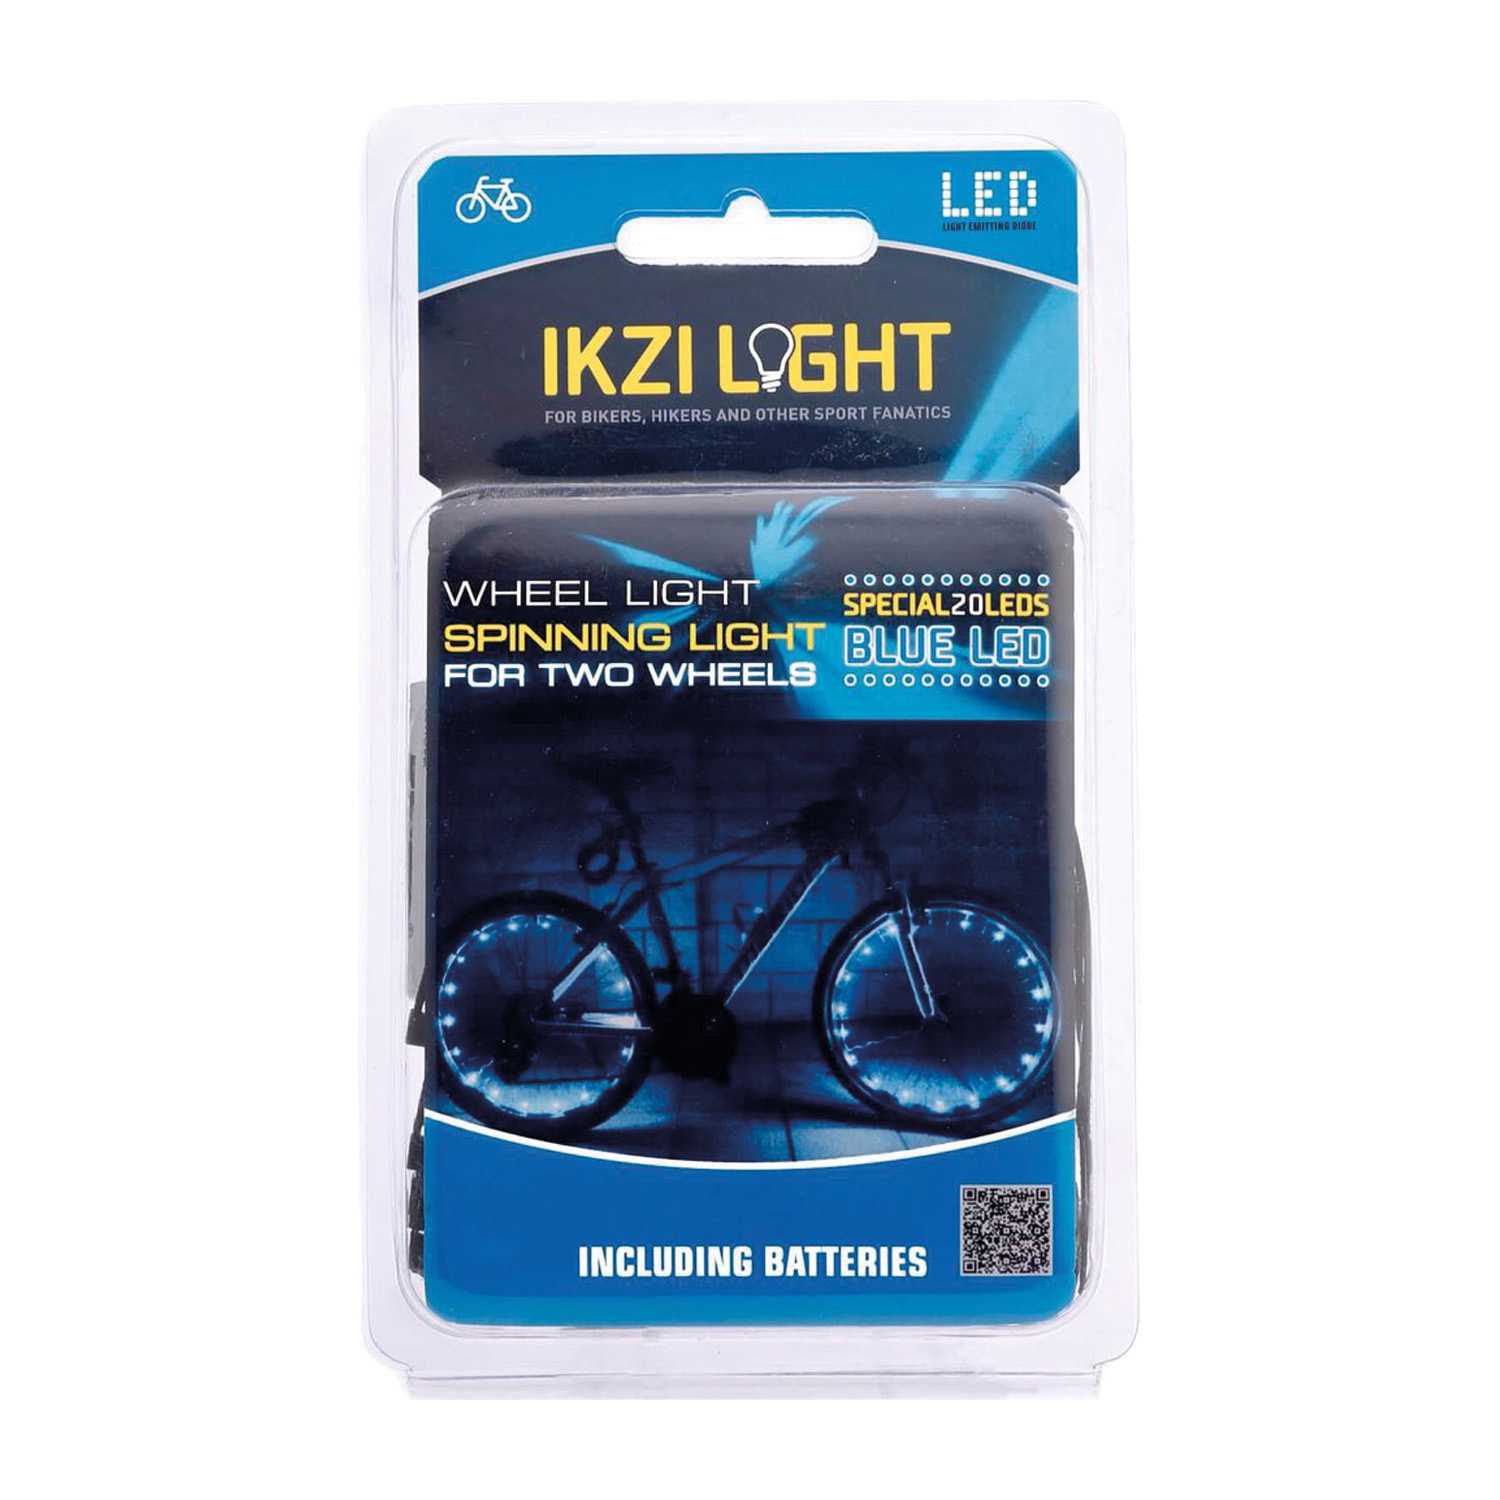 IKZI Light wiellicht Spinning light 